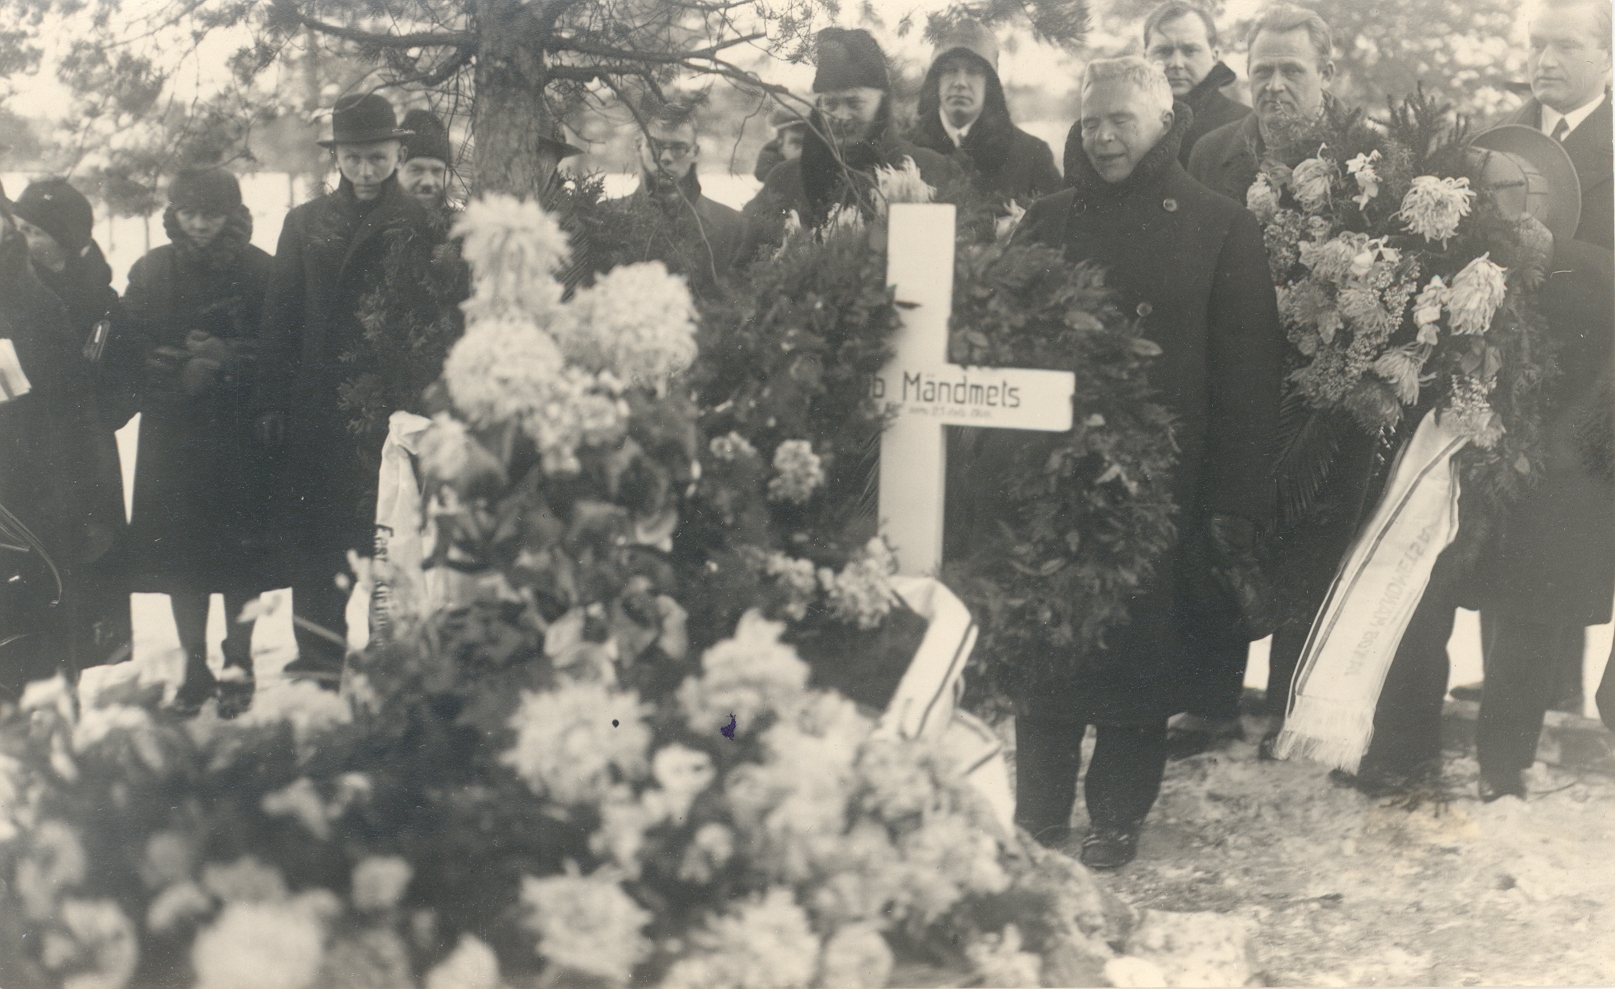 Jakob the funeral of the Mändmets